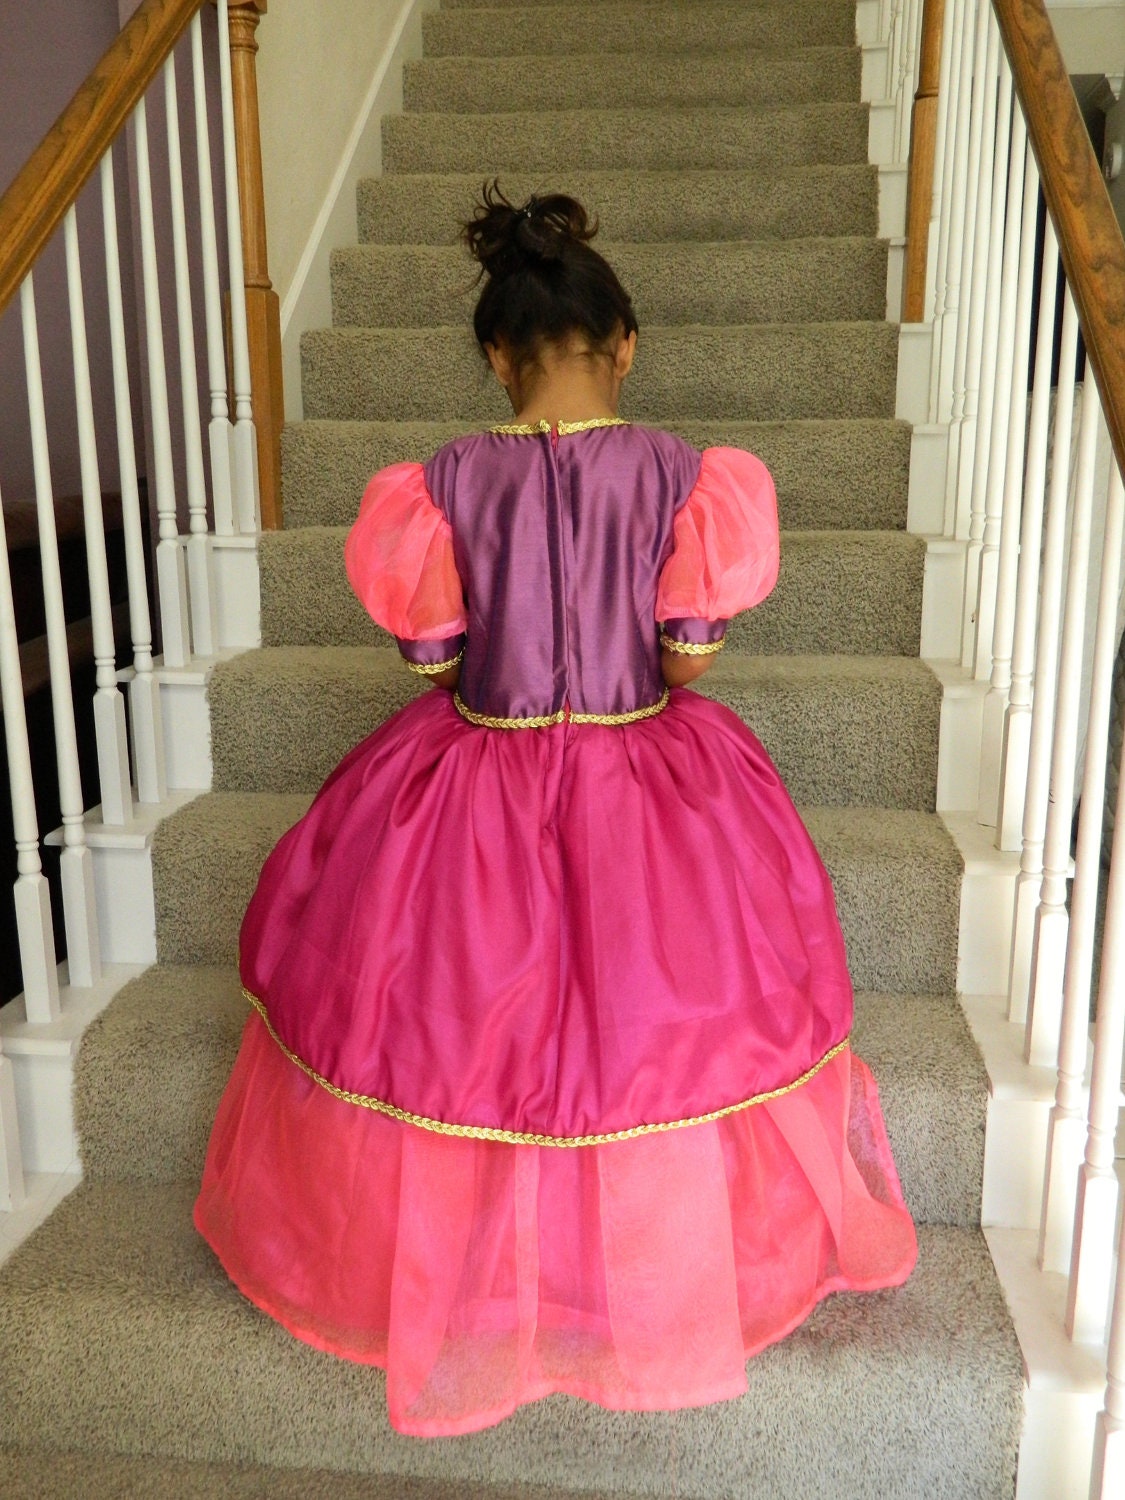 Anastasia Costume, Cinderella's Wicked Step Sister Costume, Inspired from Cinderella Fairytale